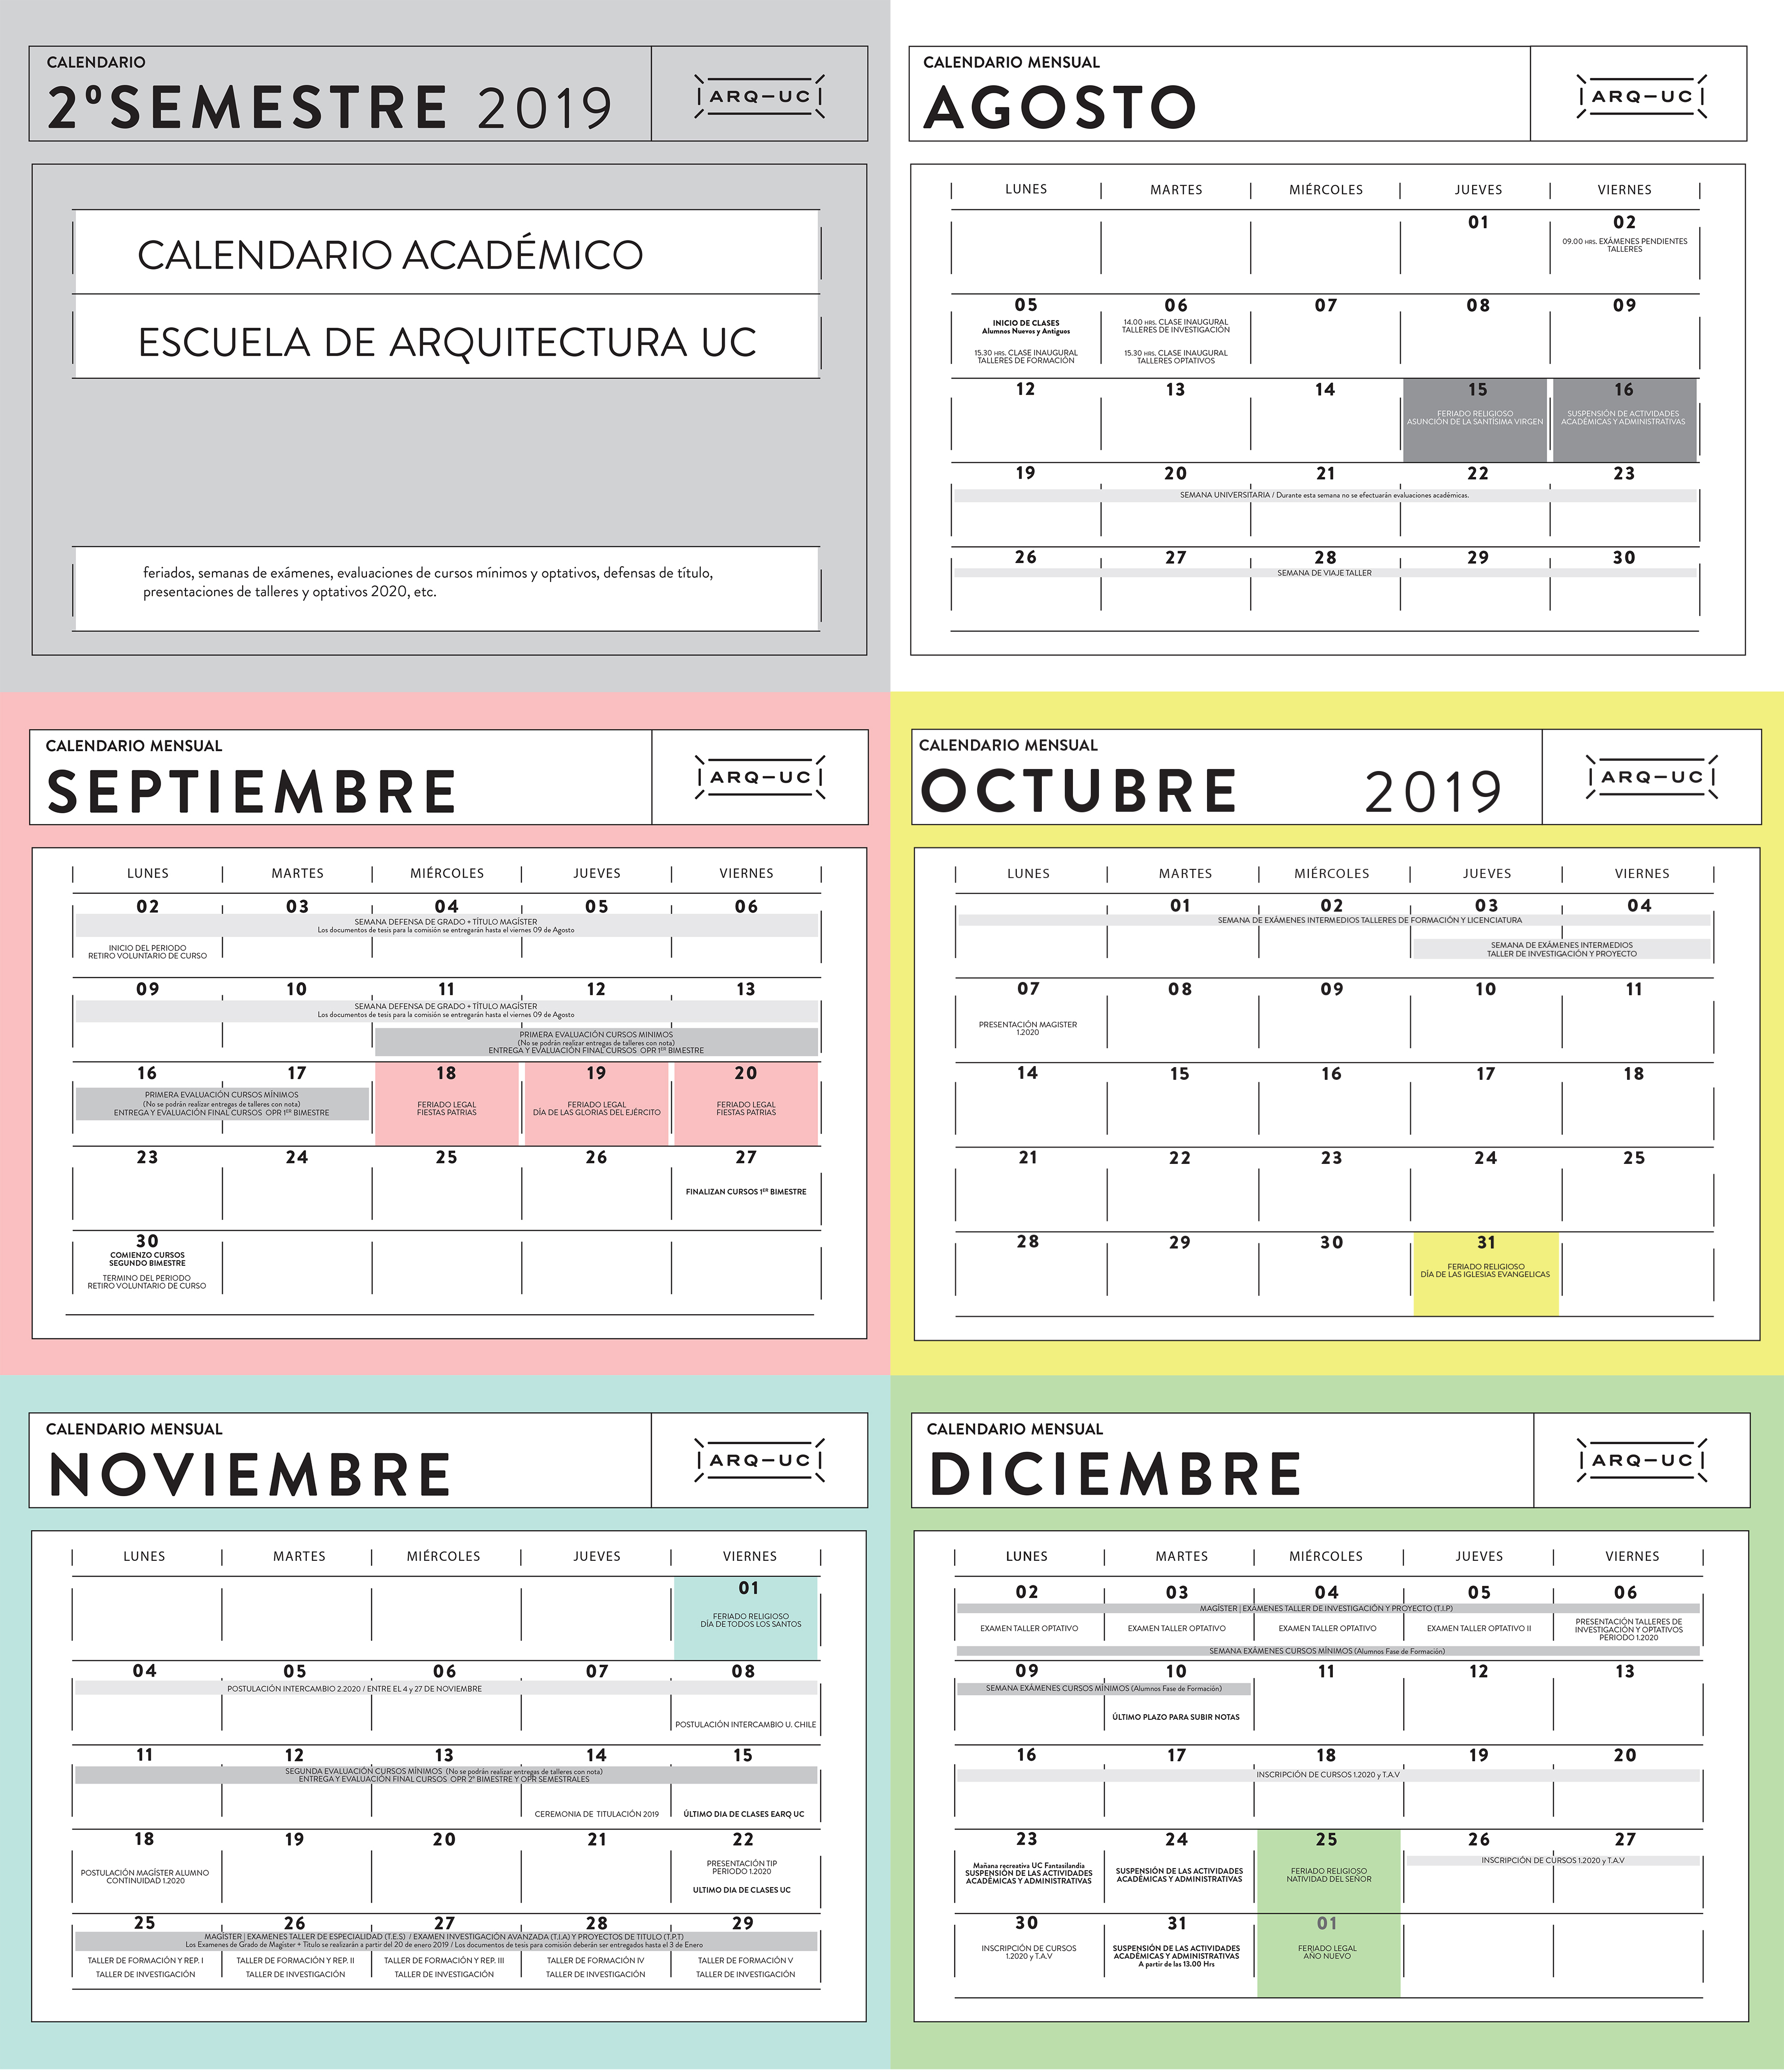 Calendario_academico_web_completo2.jpg